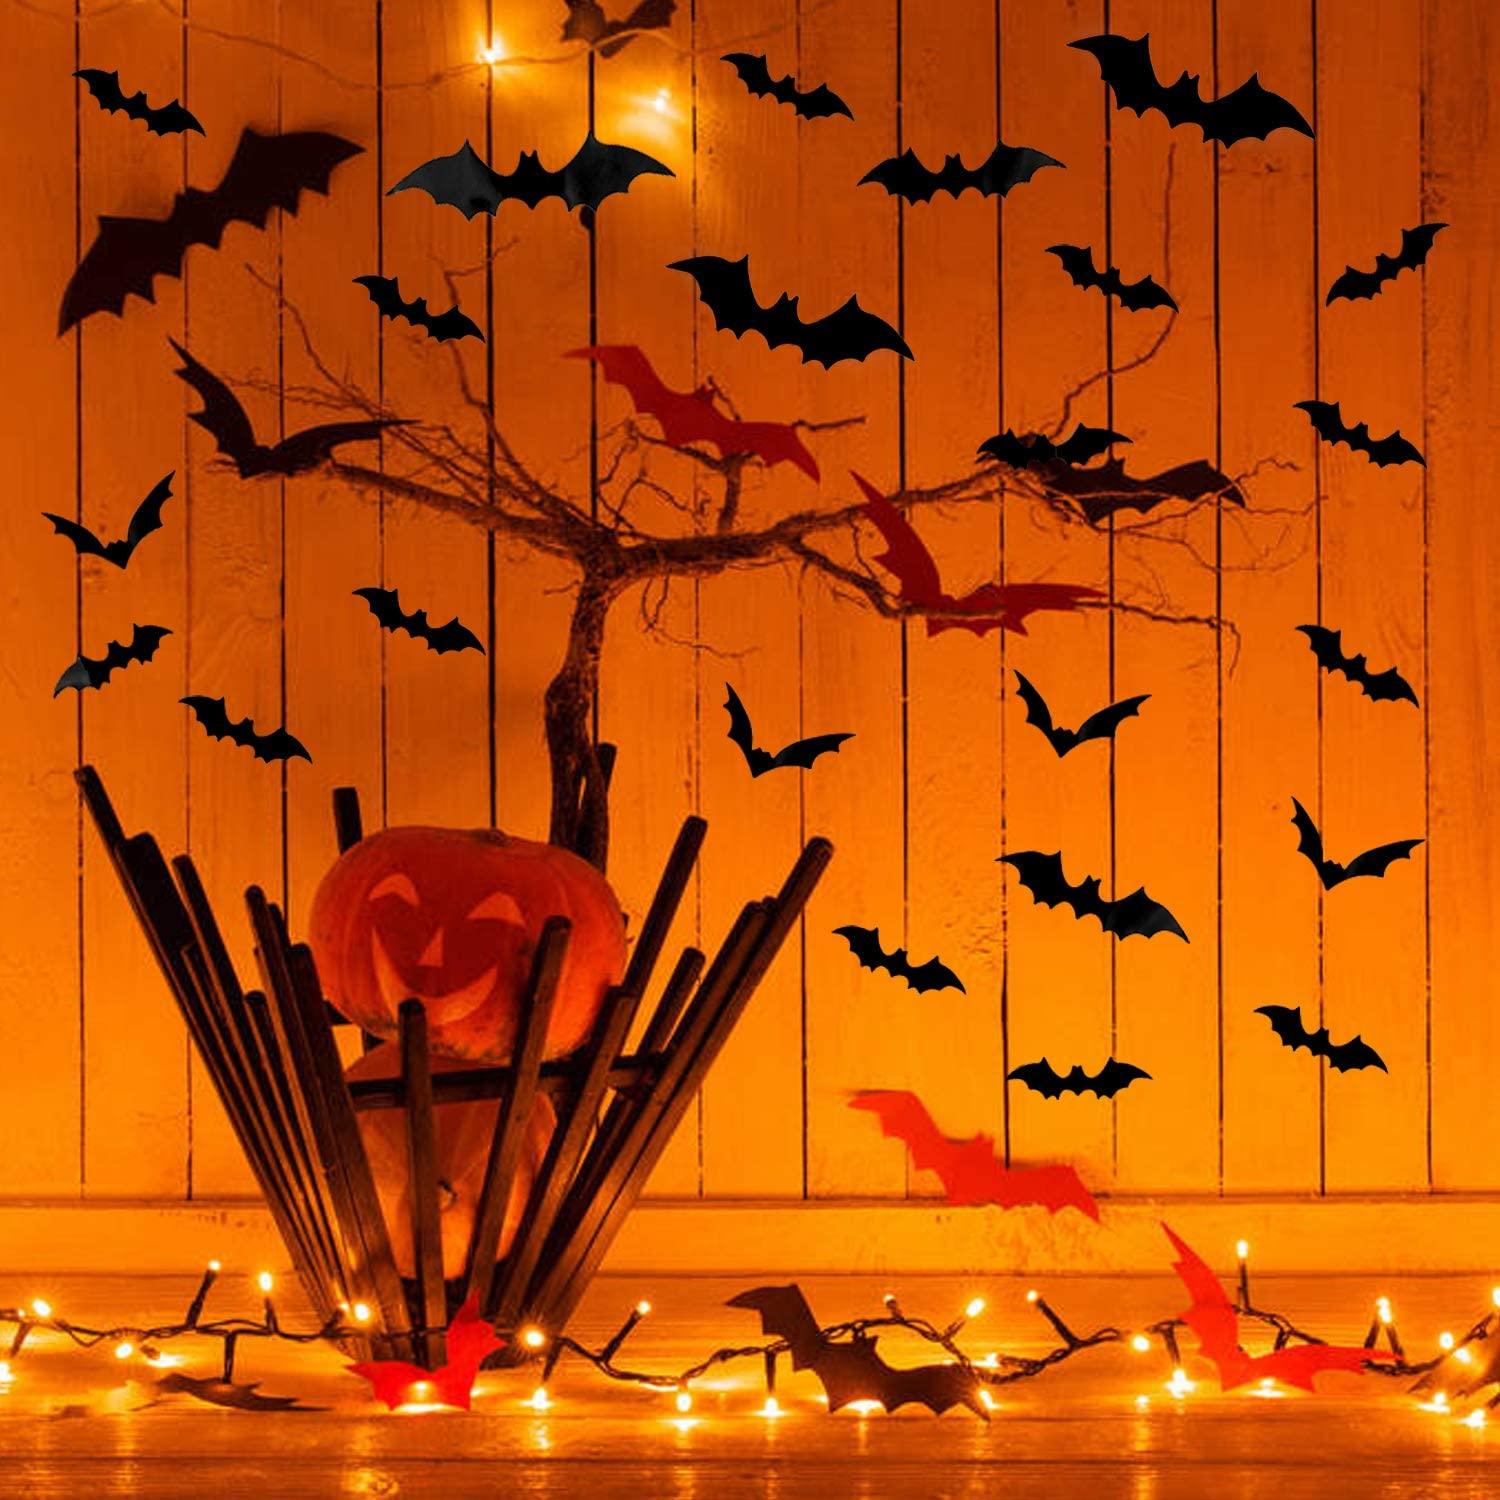 Bats Wall Decor,120 Pcs 3D Bat Halloween Decoration Stickers for Home Décor 4 Size Waterproof Black Spooky Bats for Room Décor - If you say i do